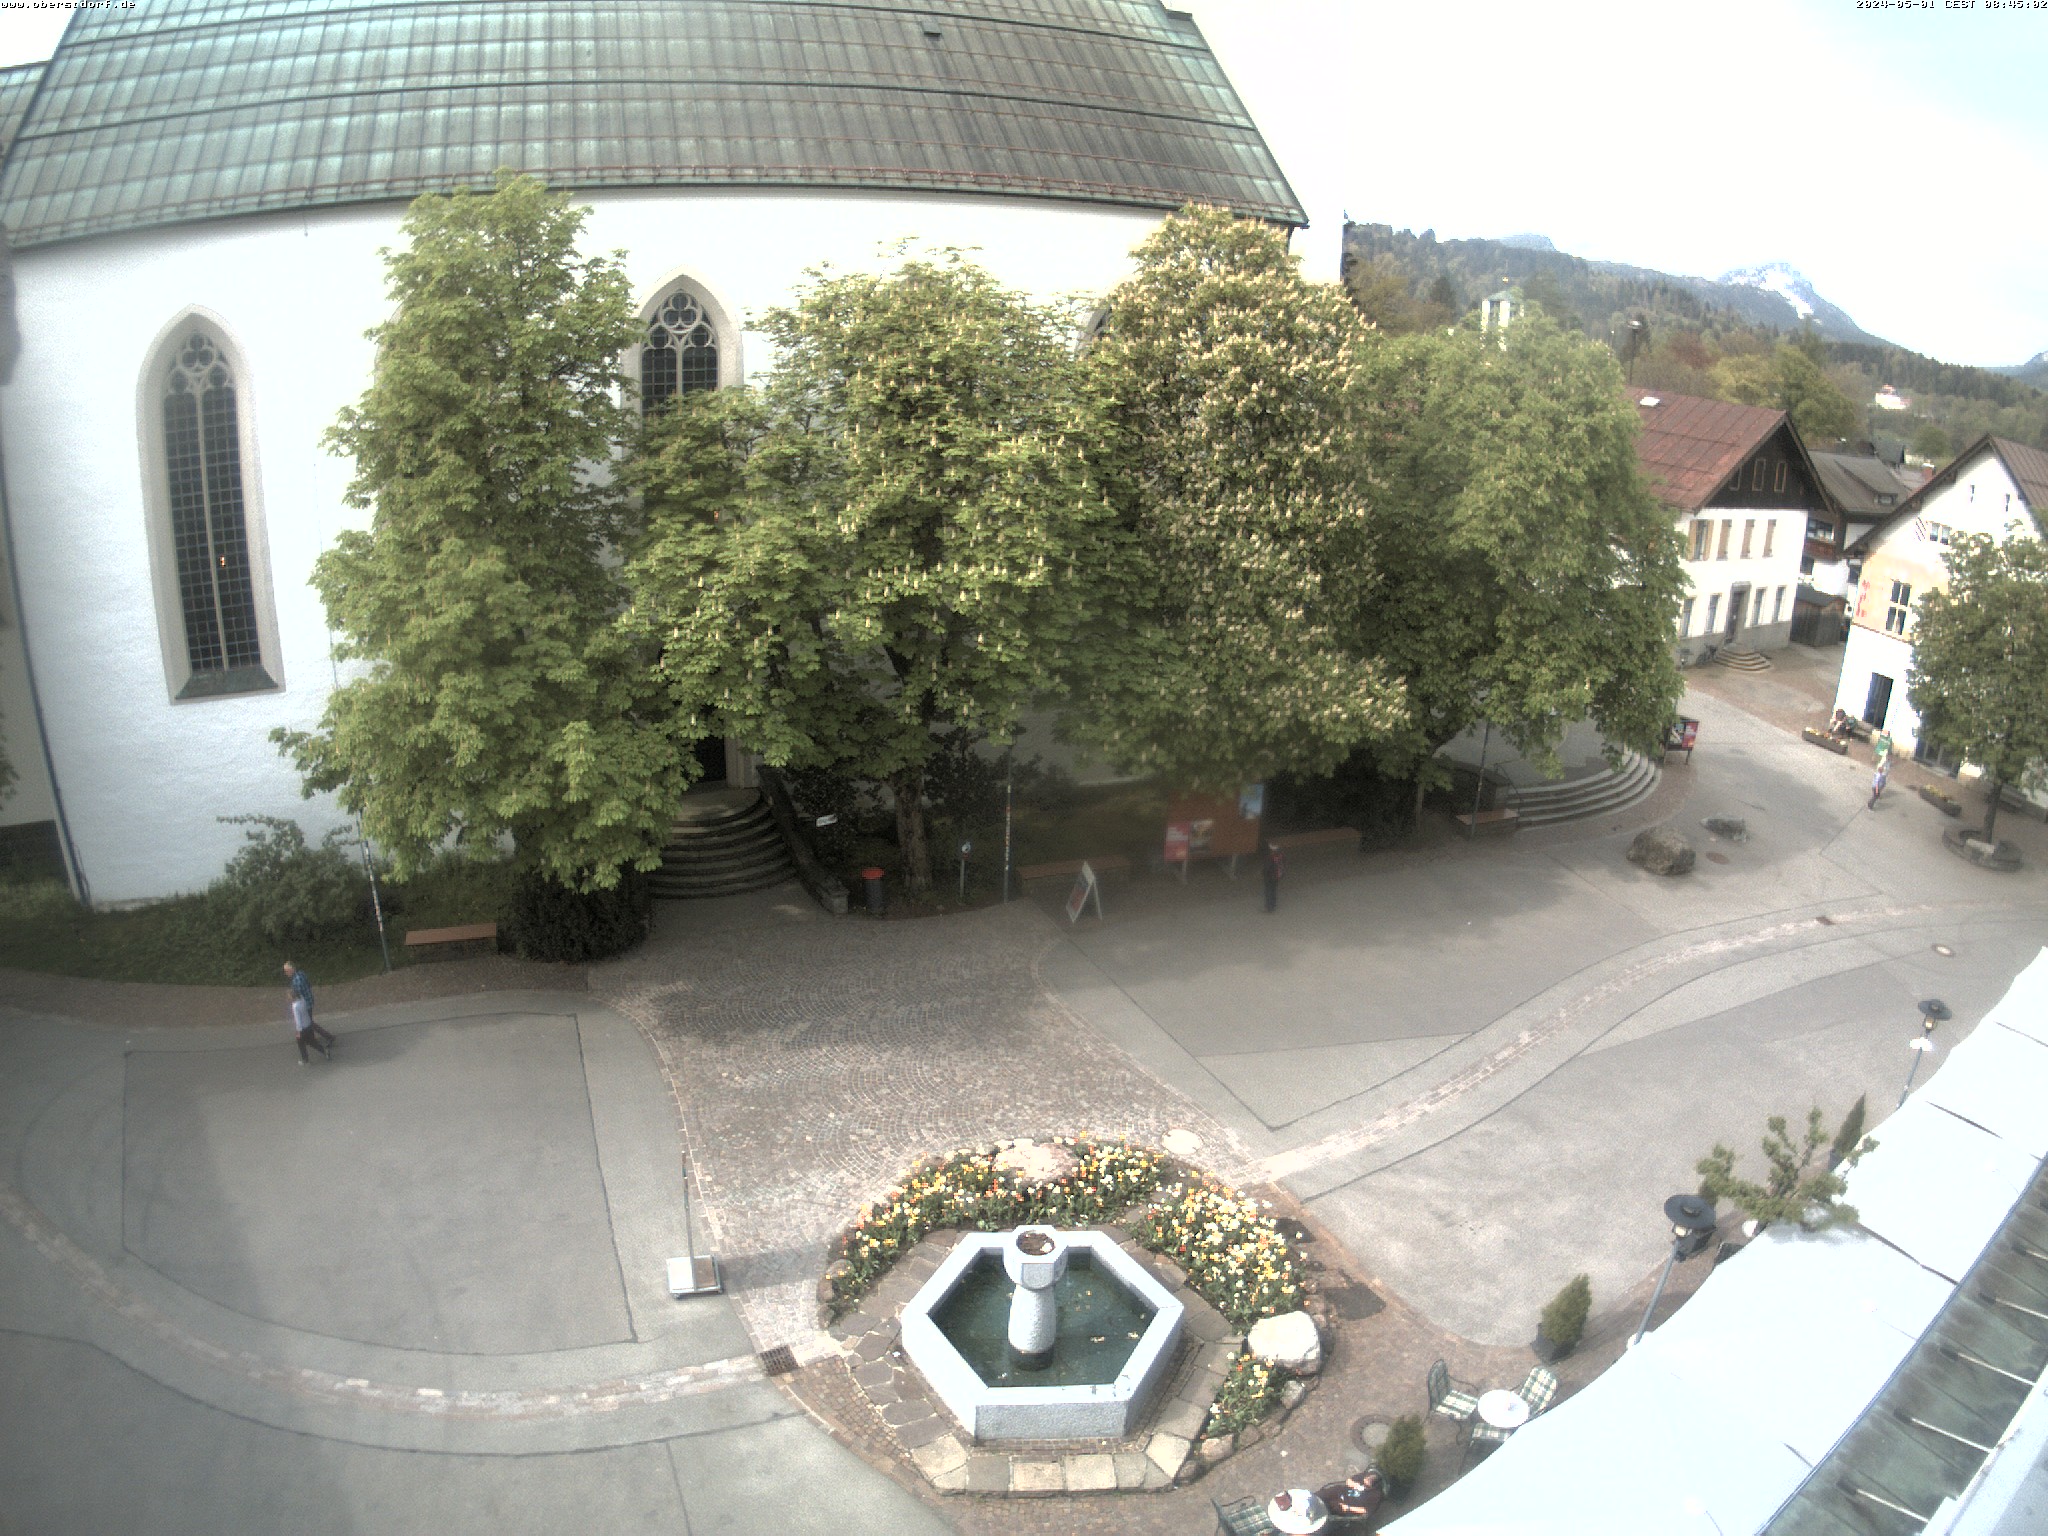 Webcam Marktplatz